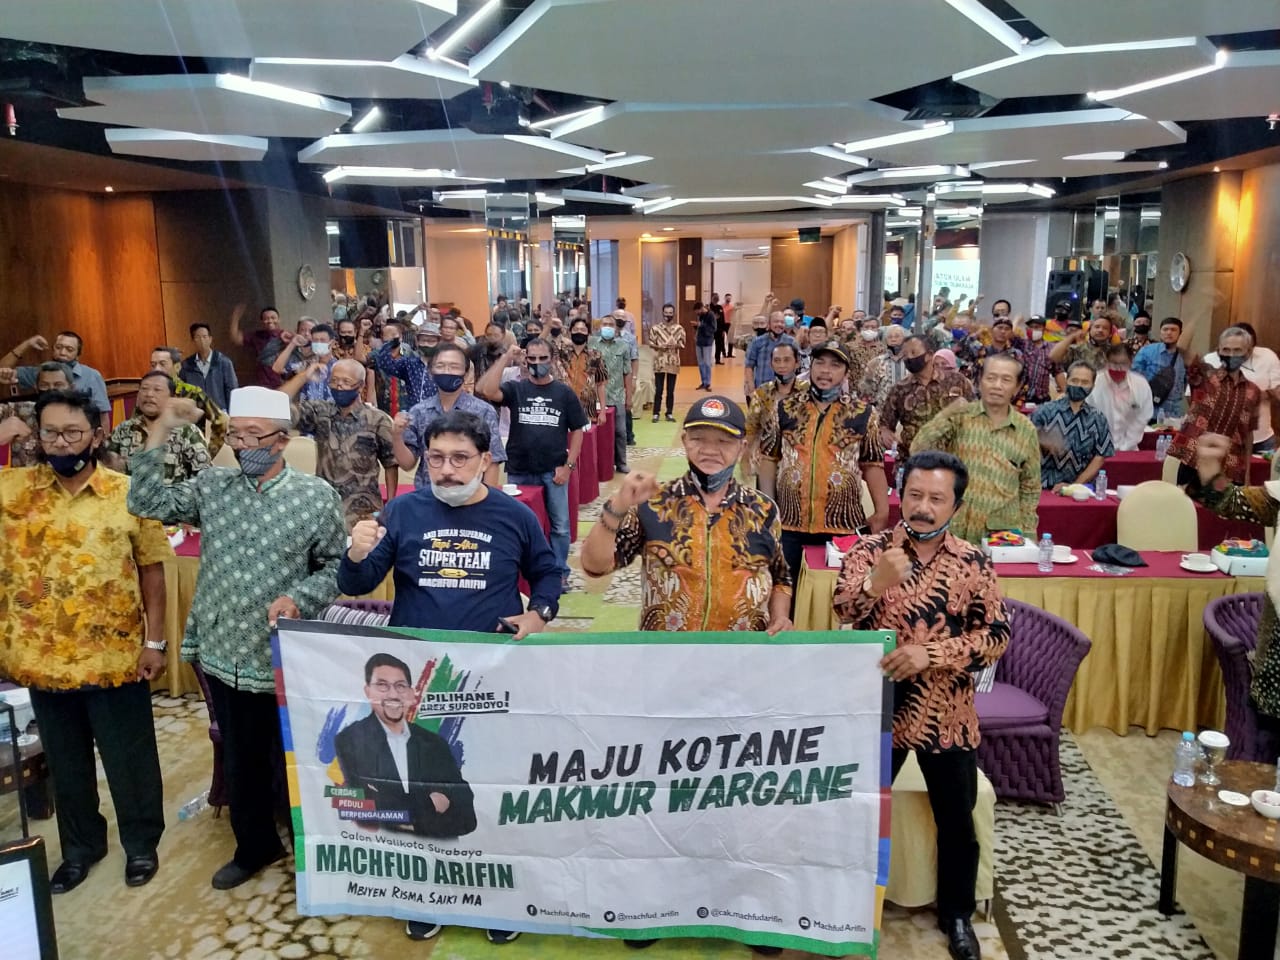 Bacawali Surabaya, Machfud Arifin, usai deklarasi bersama LPMK se-Surabaya di Hotel Mercure, Surabaya, Minggu 23 Agustus 2020. (Foto: Fariz Yarbo/Ngopibareng.id)